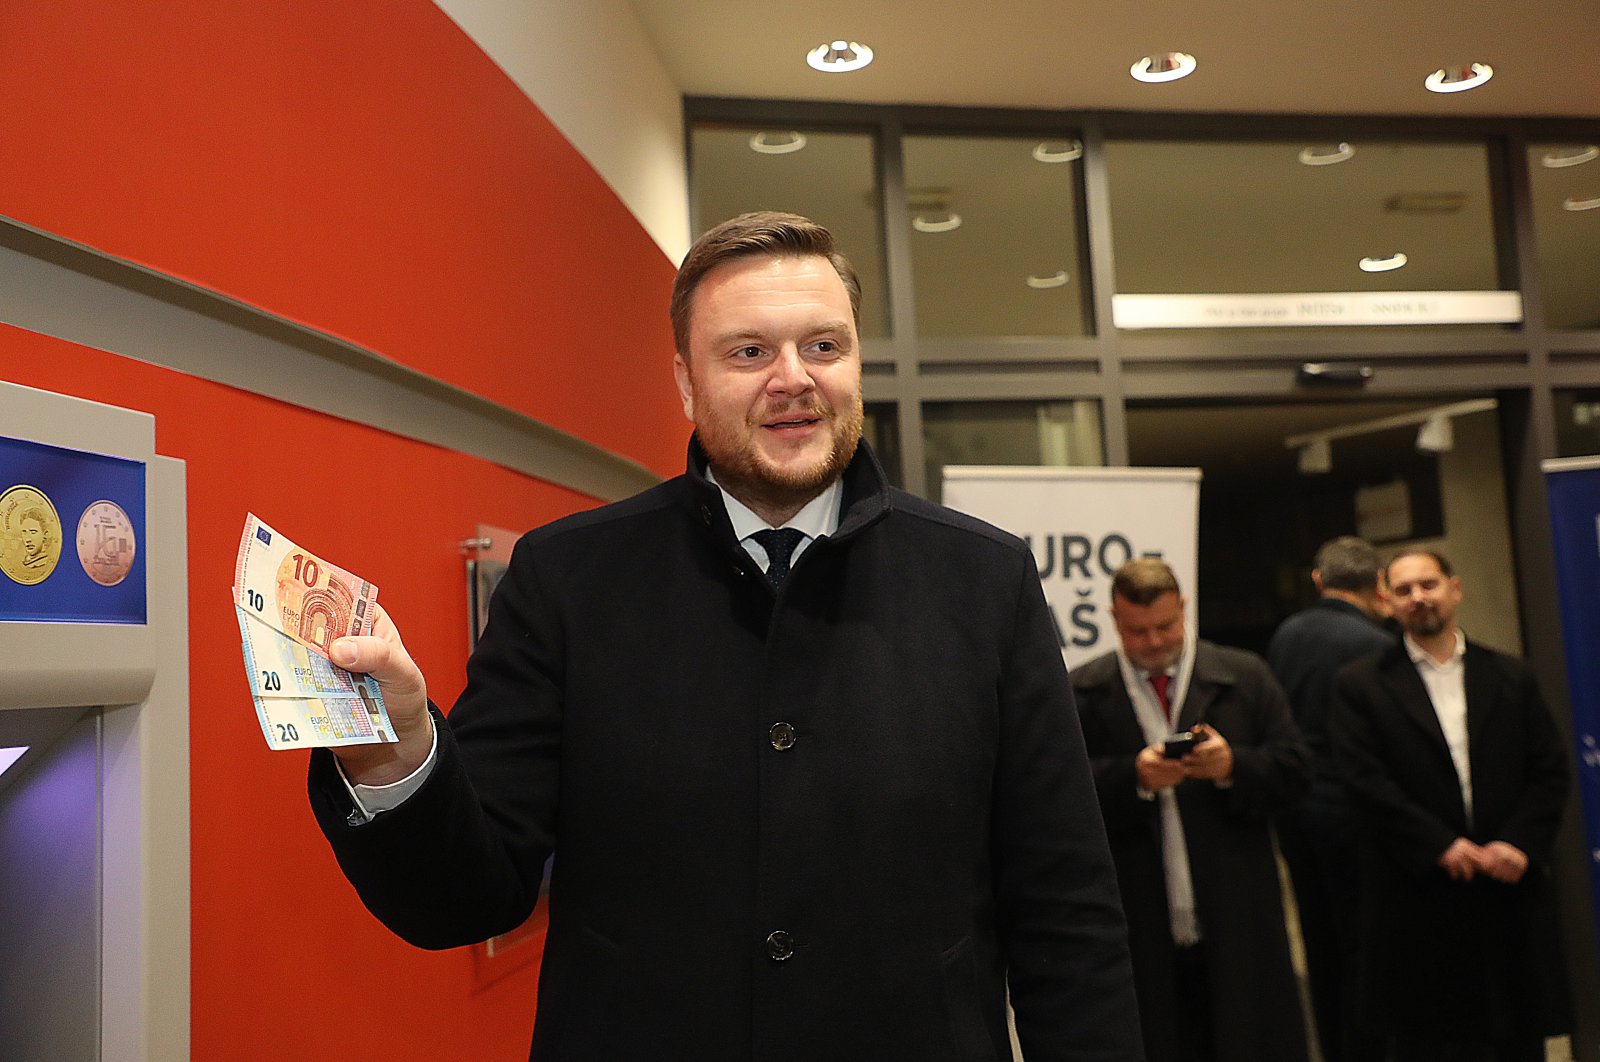 Croatian Finance Minister Marko Primorac withdraws euro banknotes at an ATM in Zagreb, Croatia, Jan. 1, 2023. (EPA Photo)